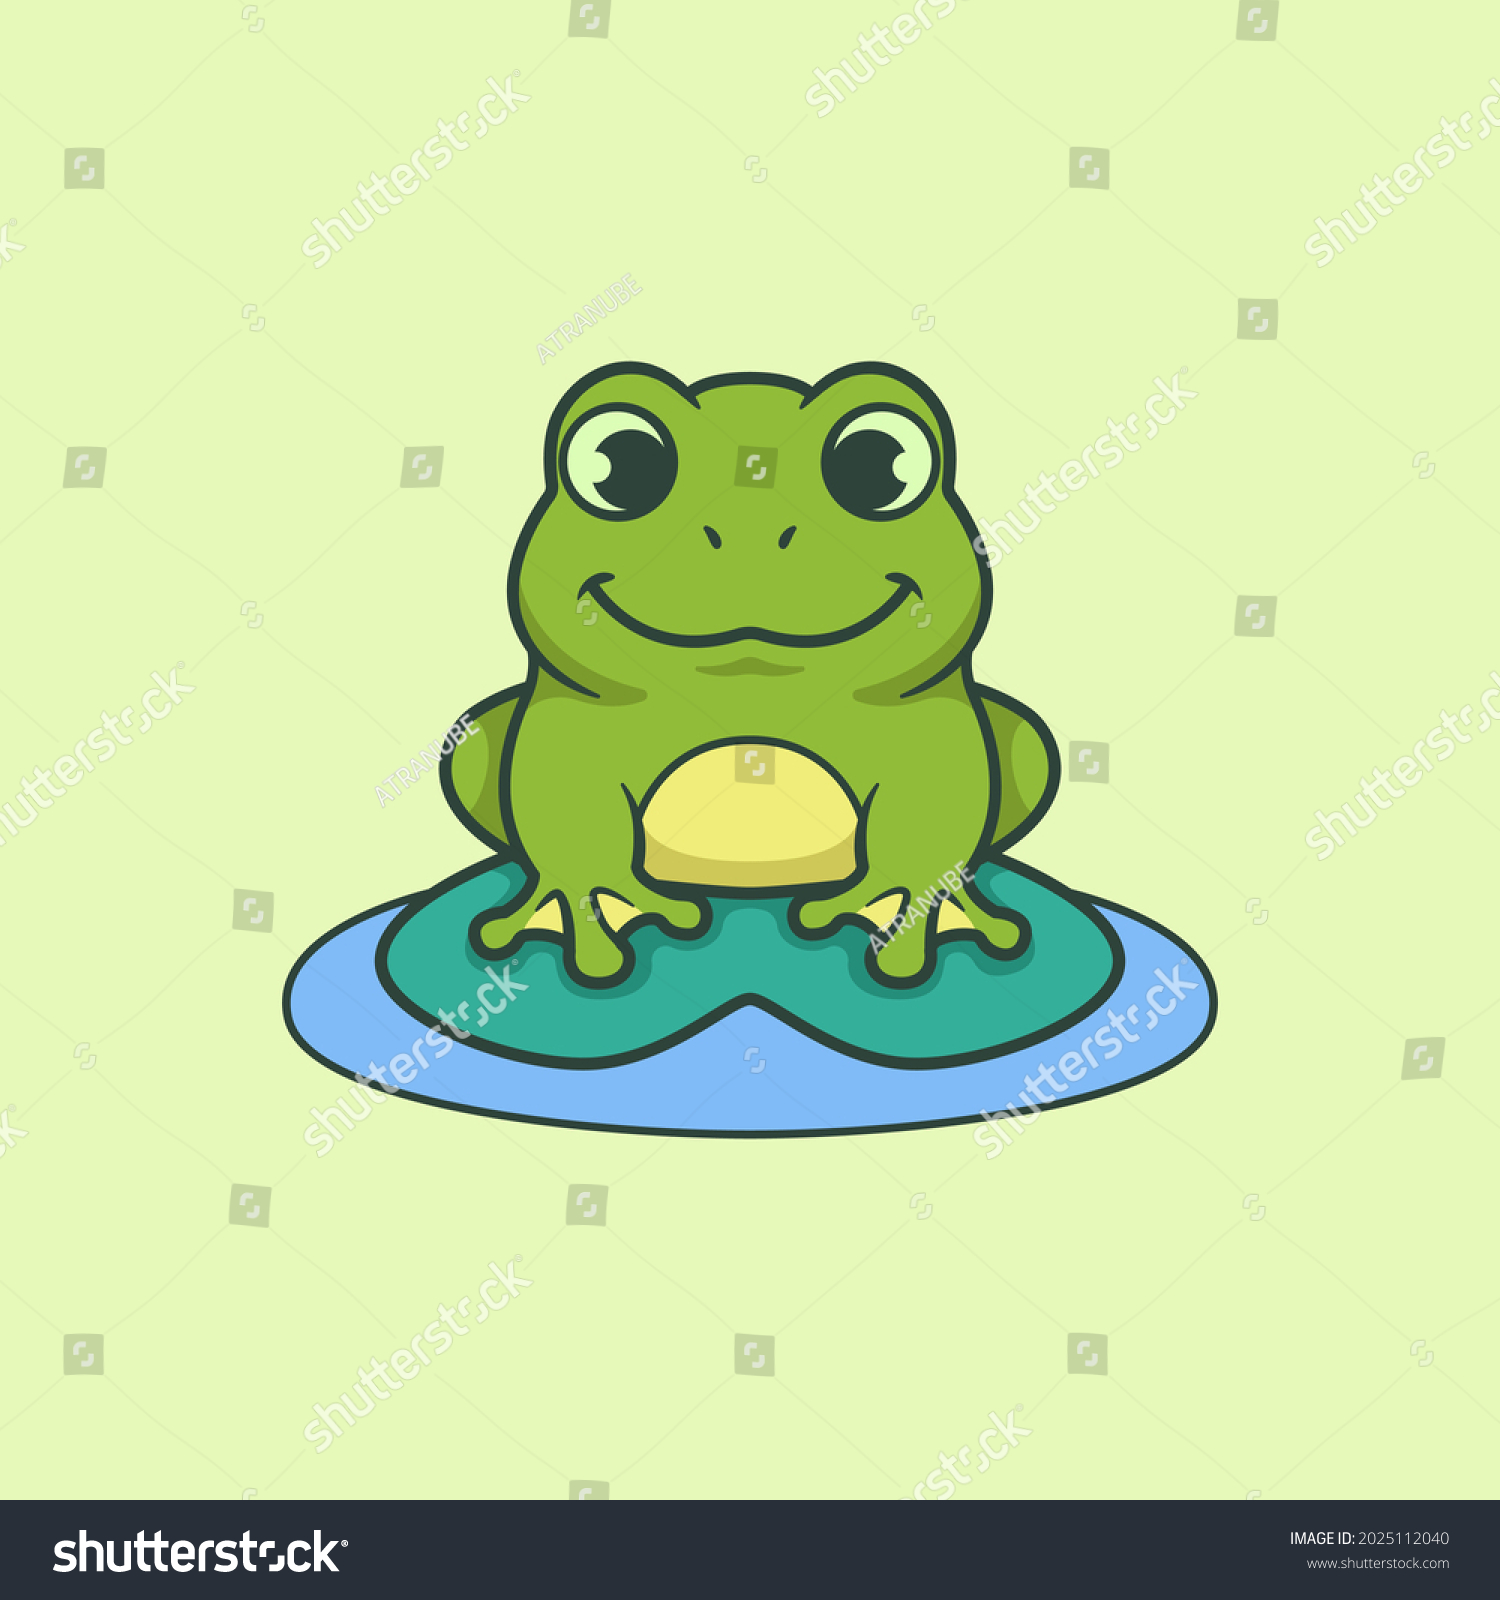 Cartoon Vector Green Cute Smiling Frog Stock Vector Royalty Free Shutterstock